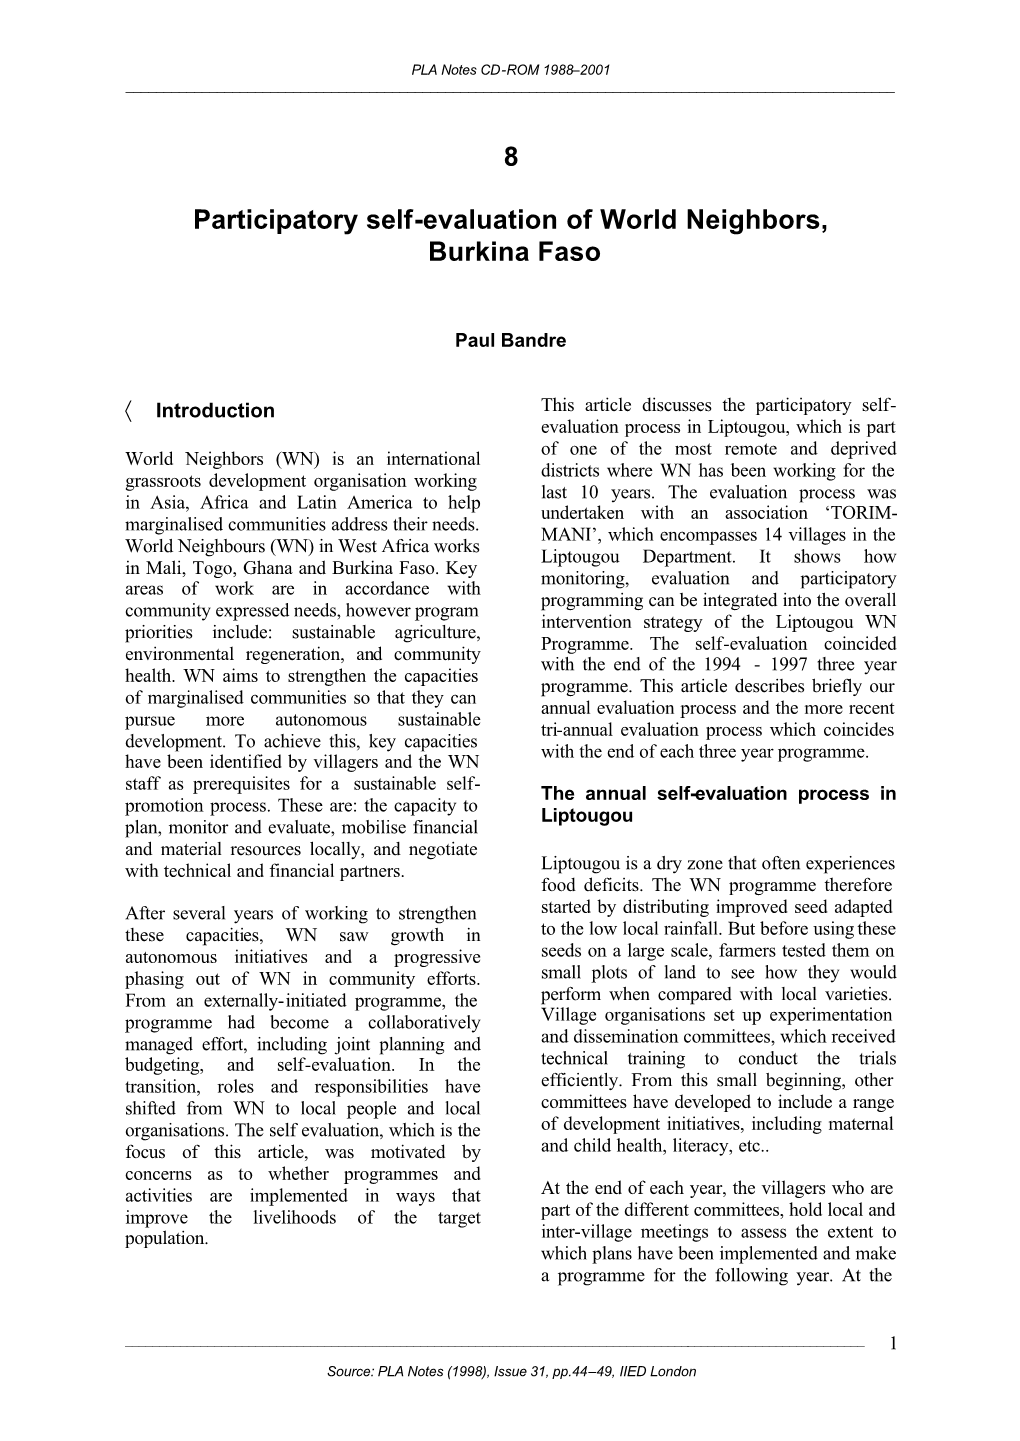 8 Participatory Self-Evaluation of World Neighbors, Burkina Faso